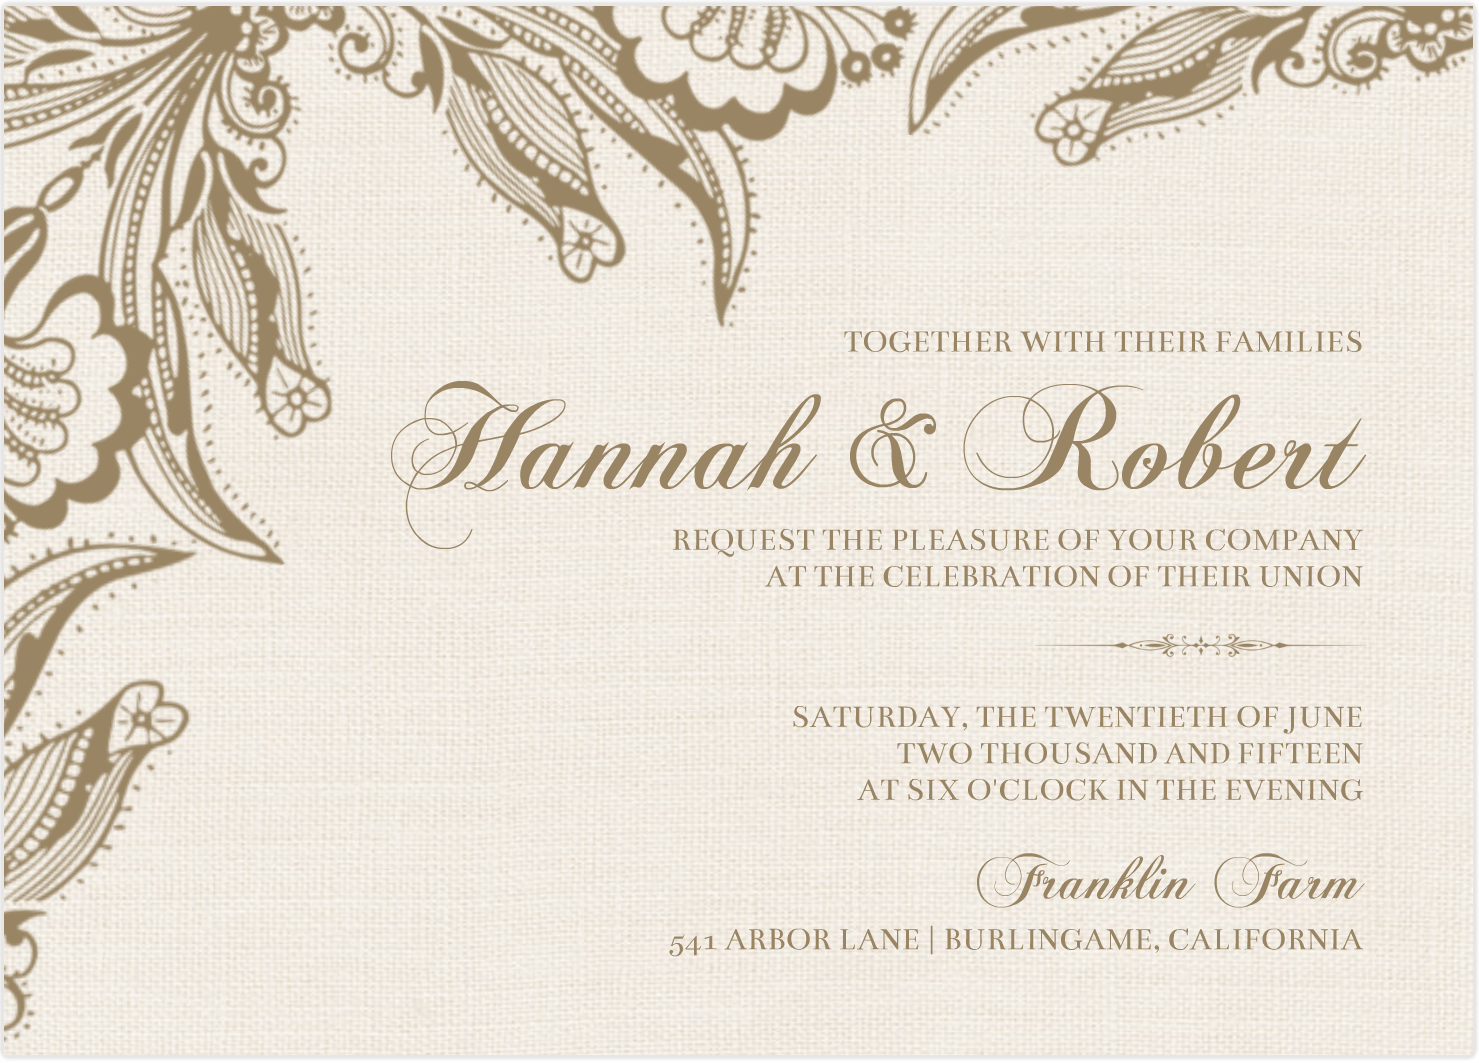 Invitation Card background